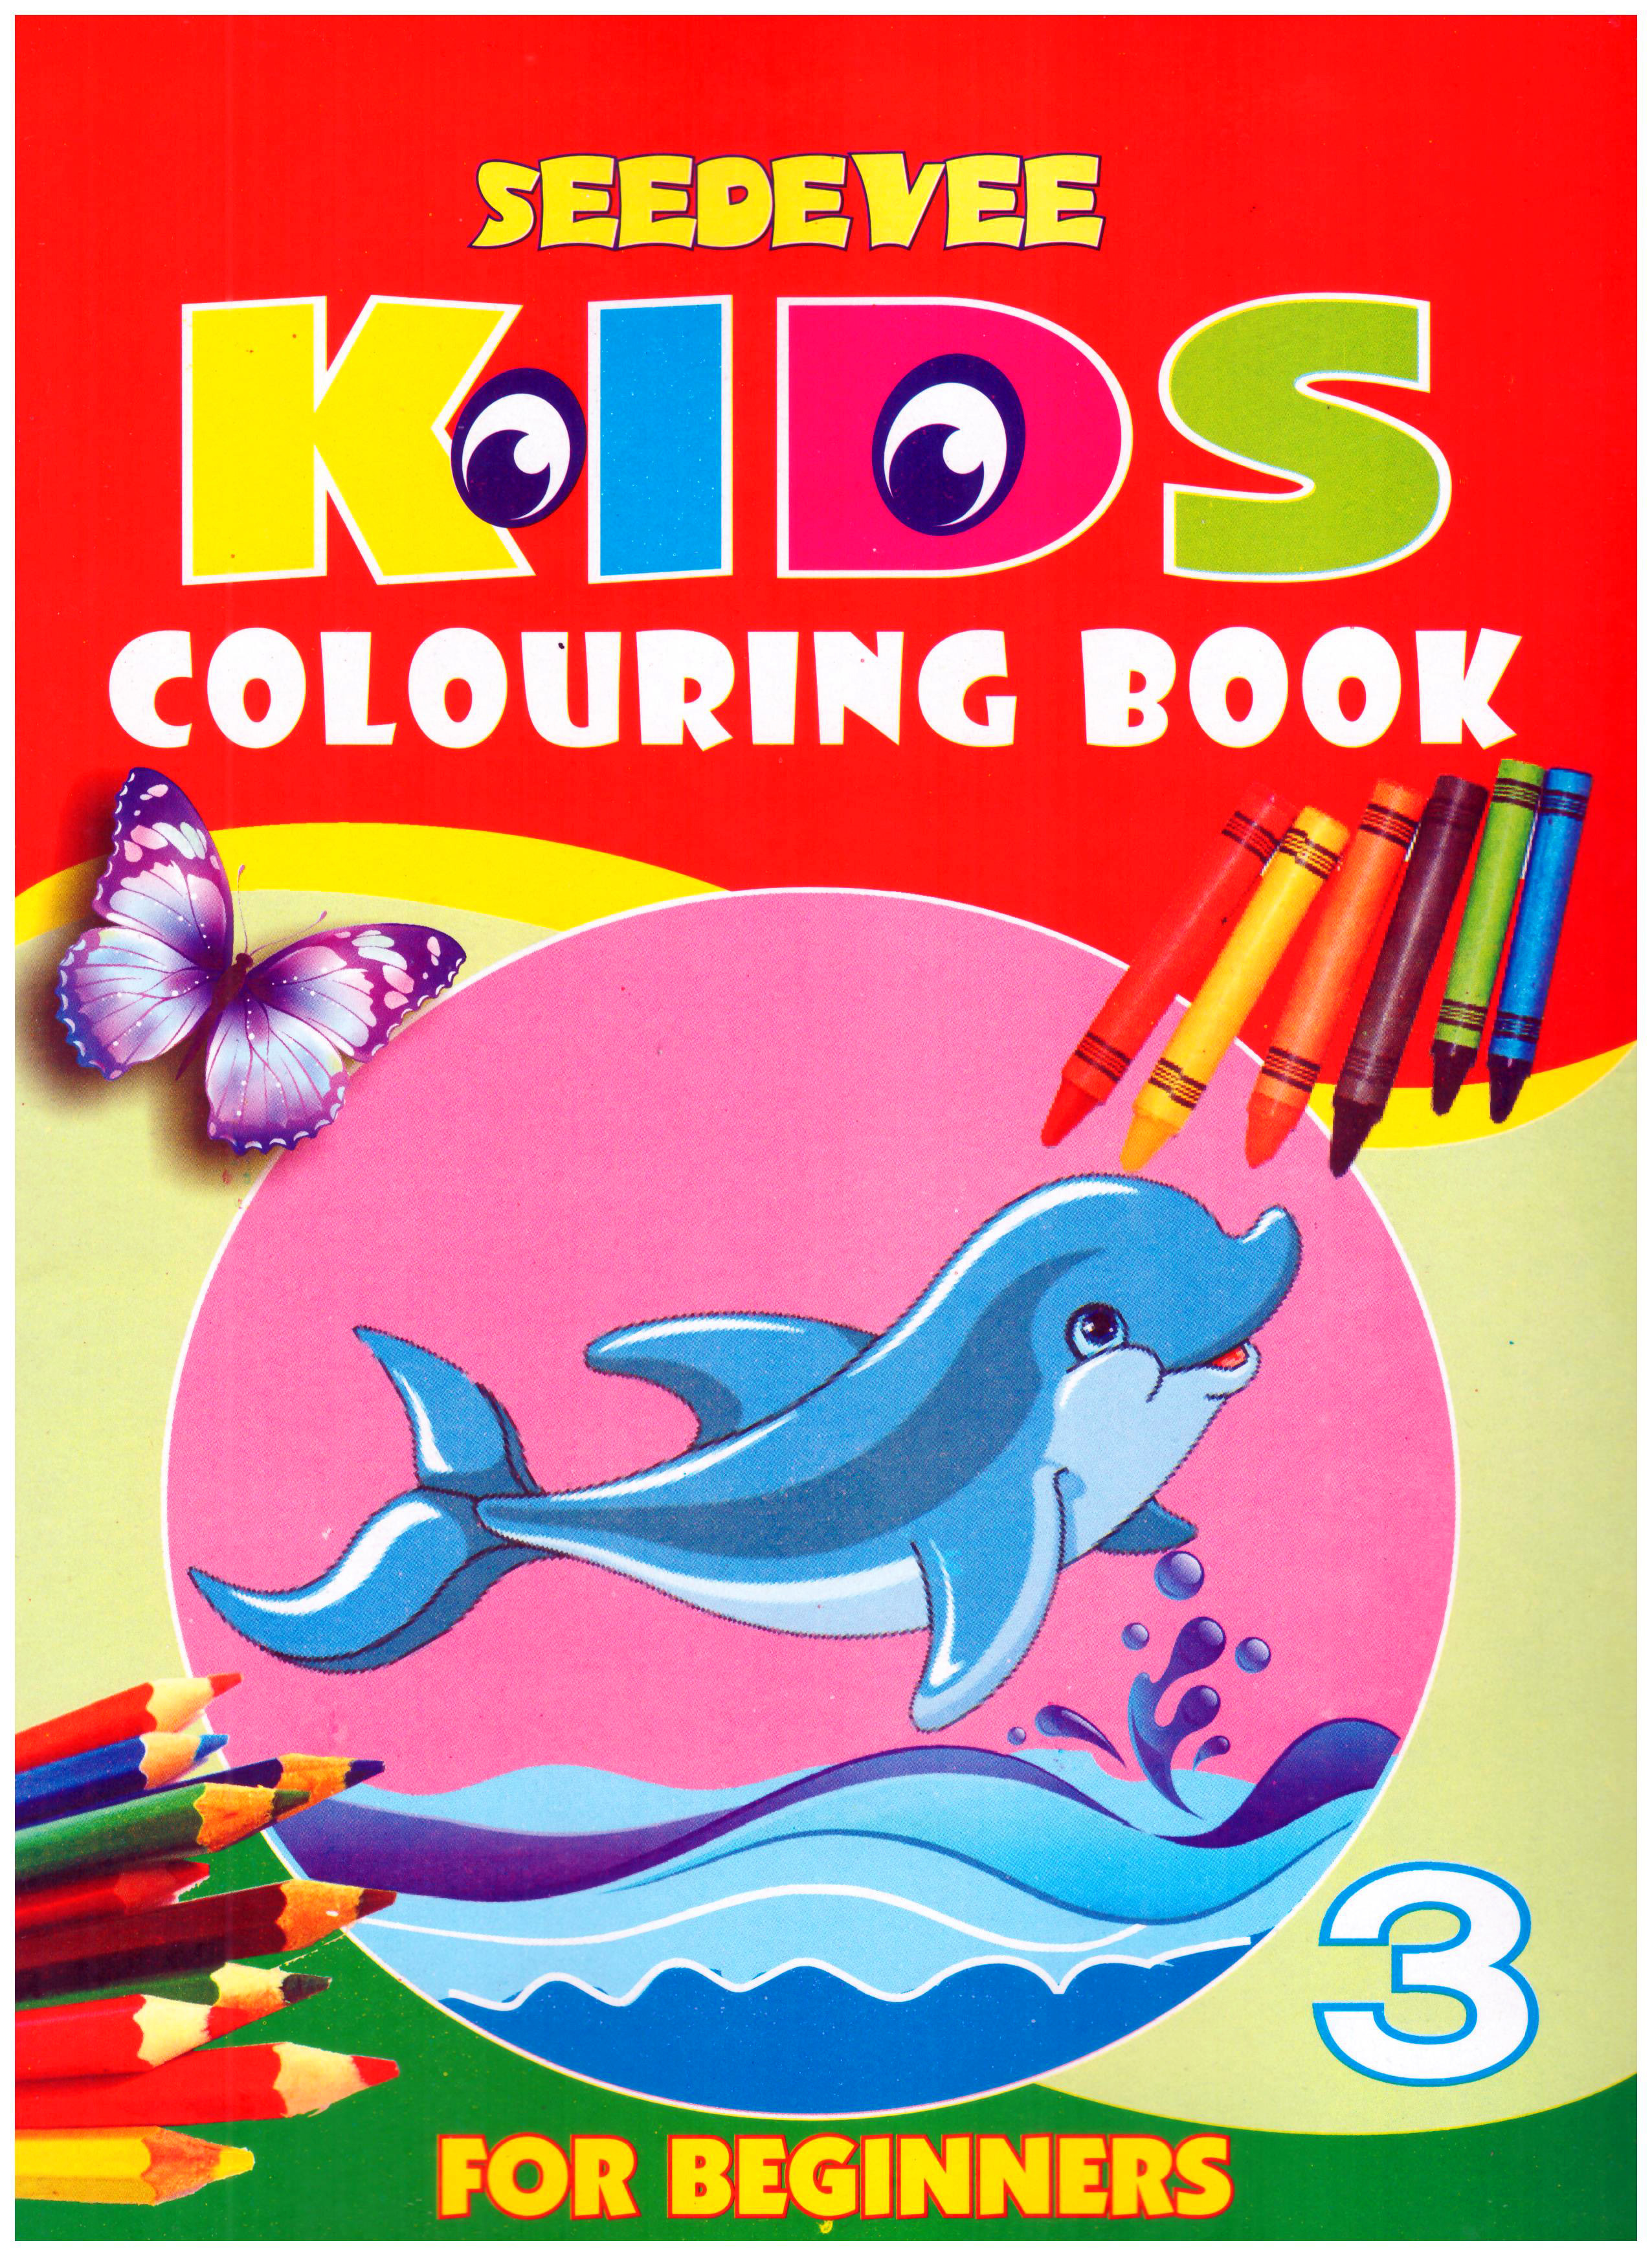 Seedevee Kids Colouring Book for Beginners 3